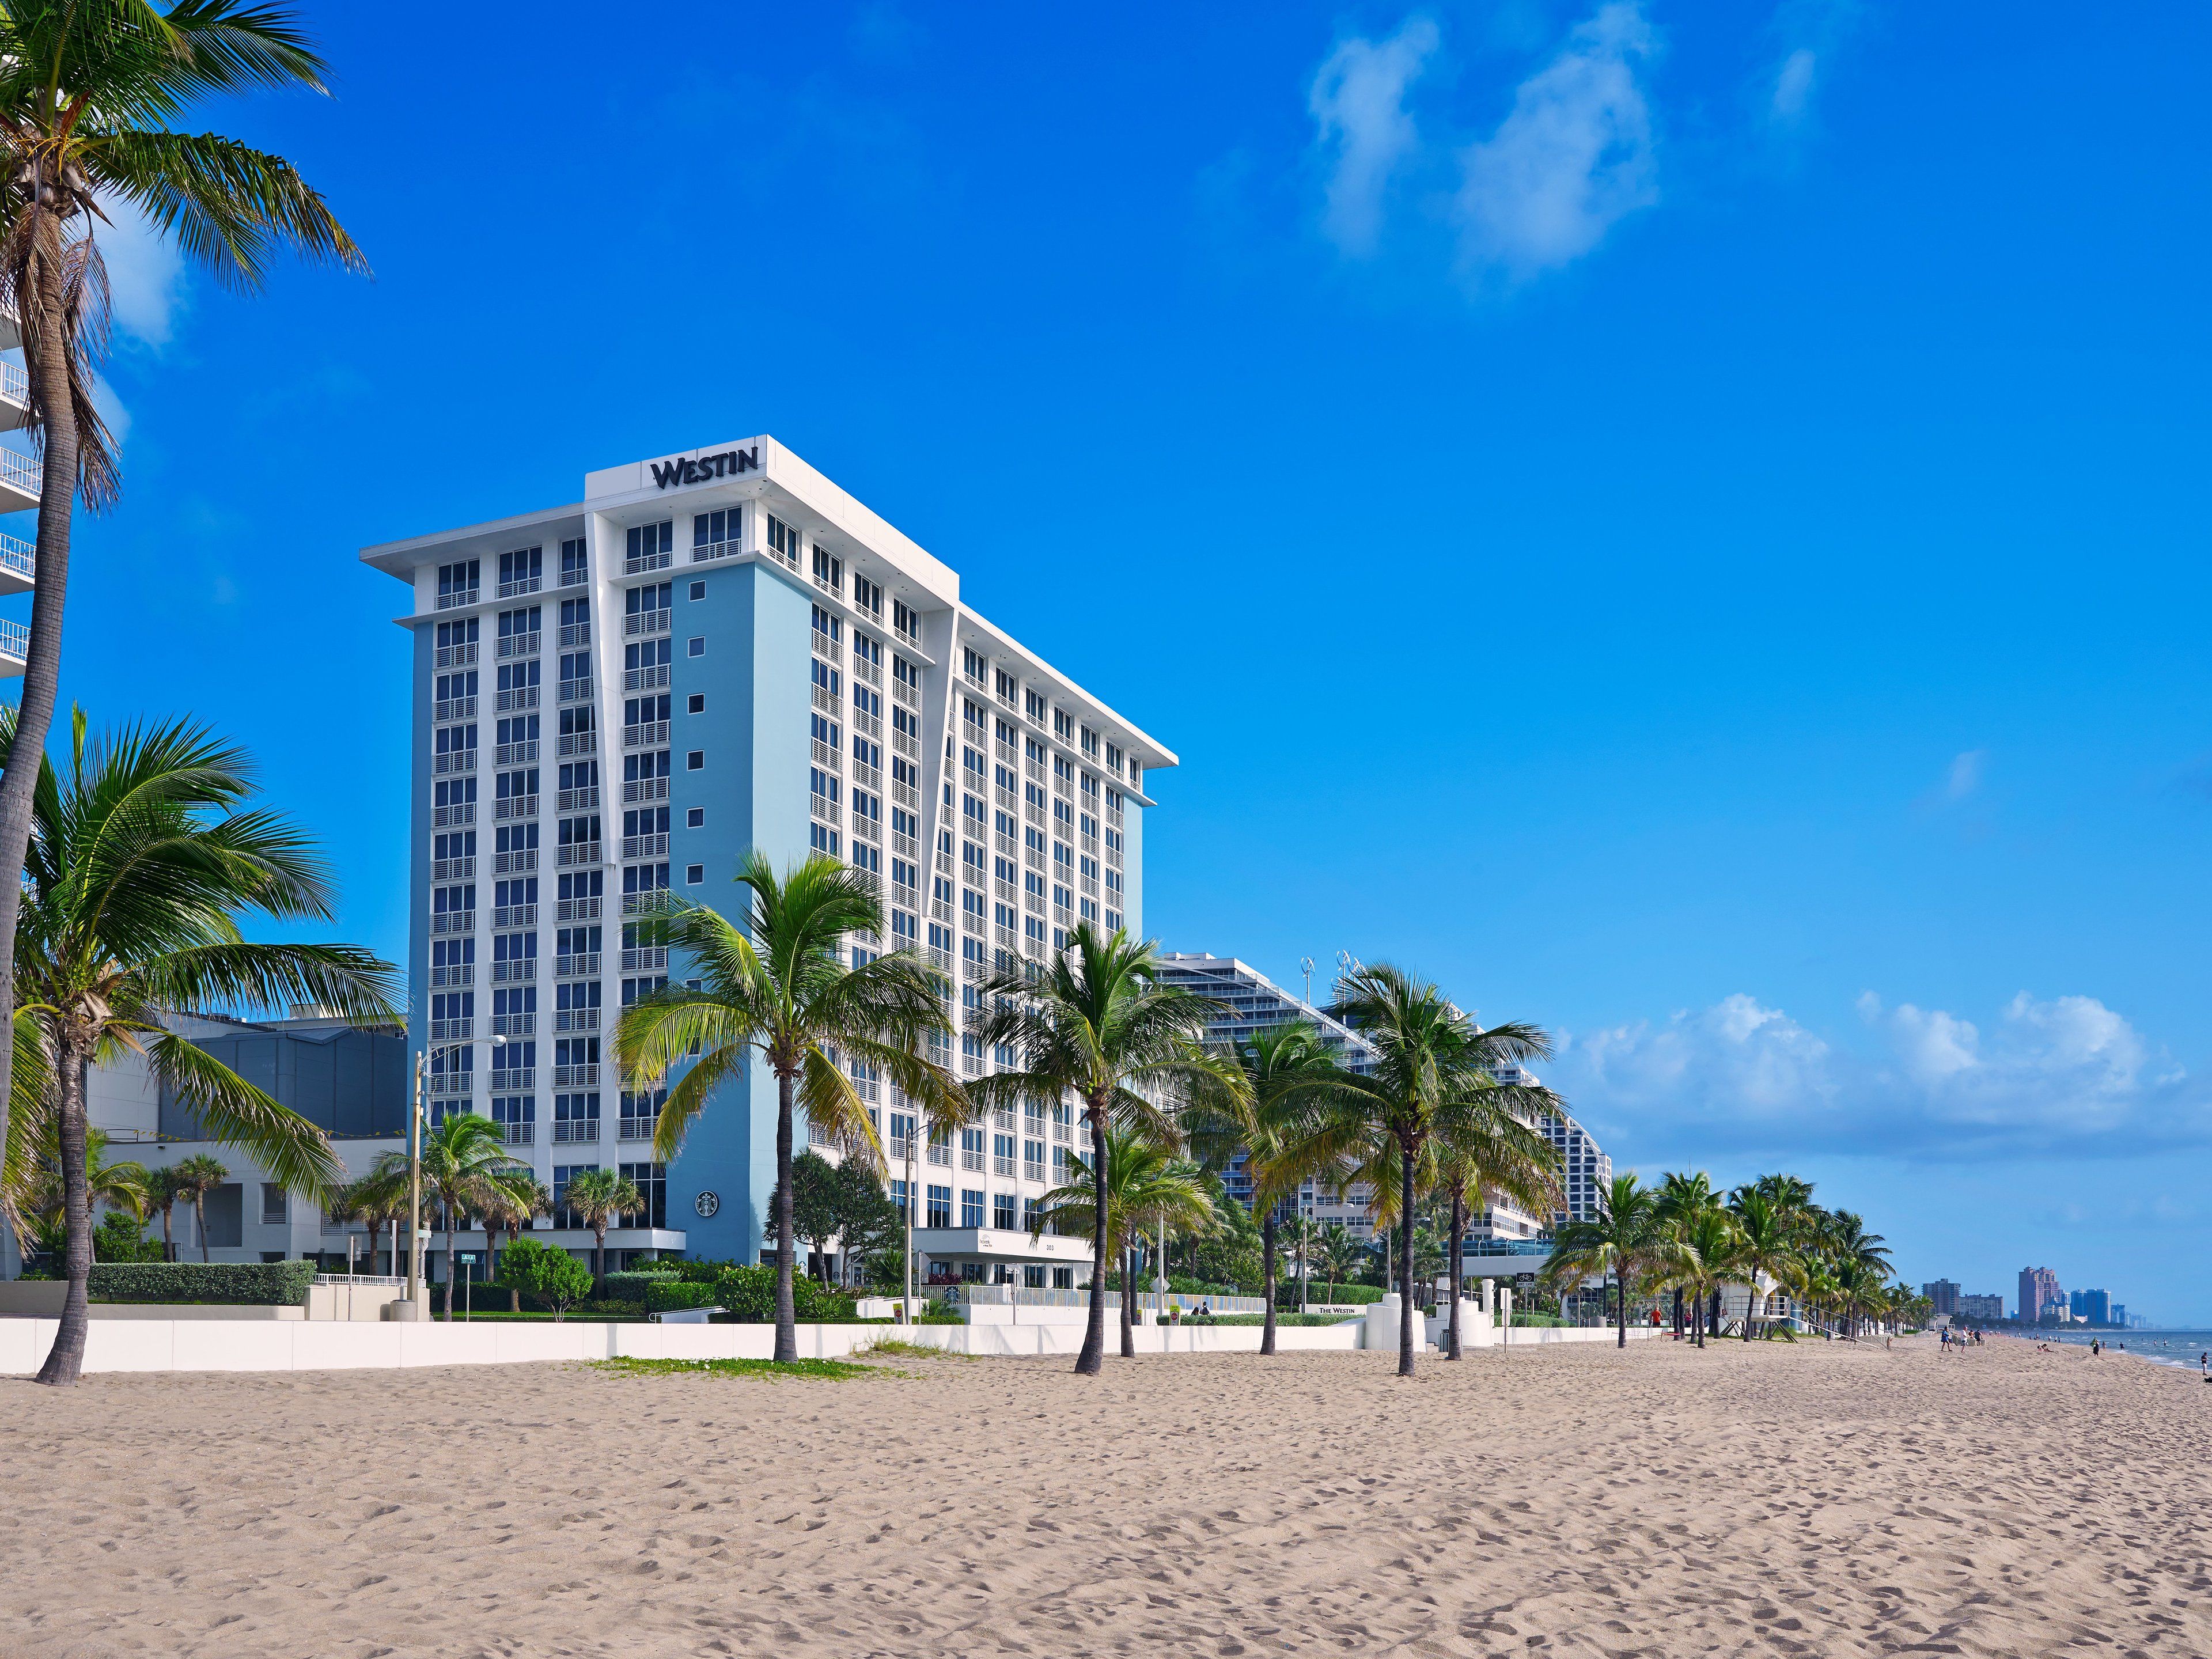 The Westin Fort Lauderdale Beach Resort image 1